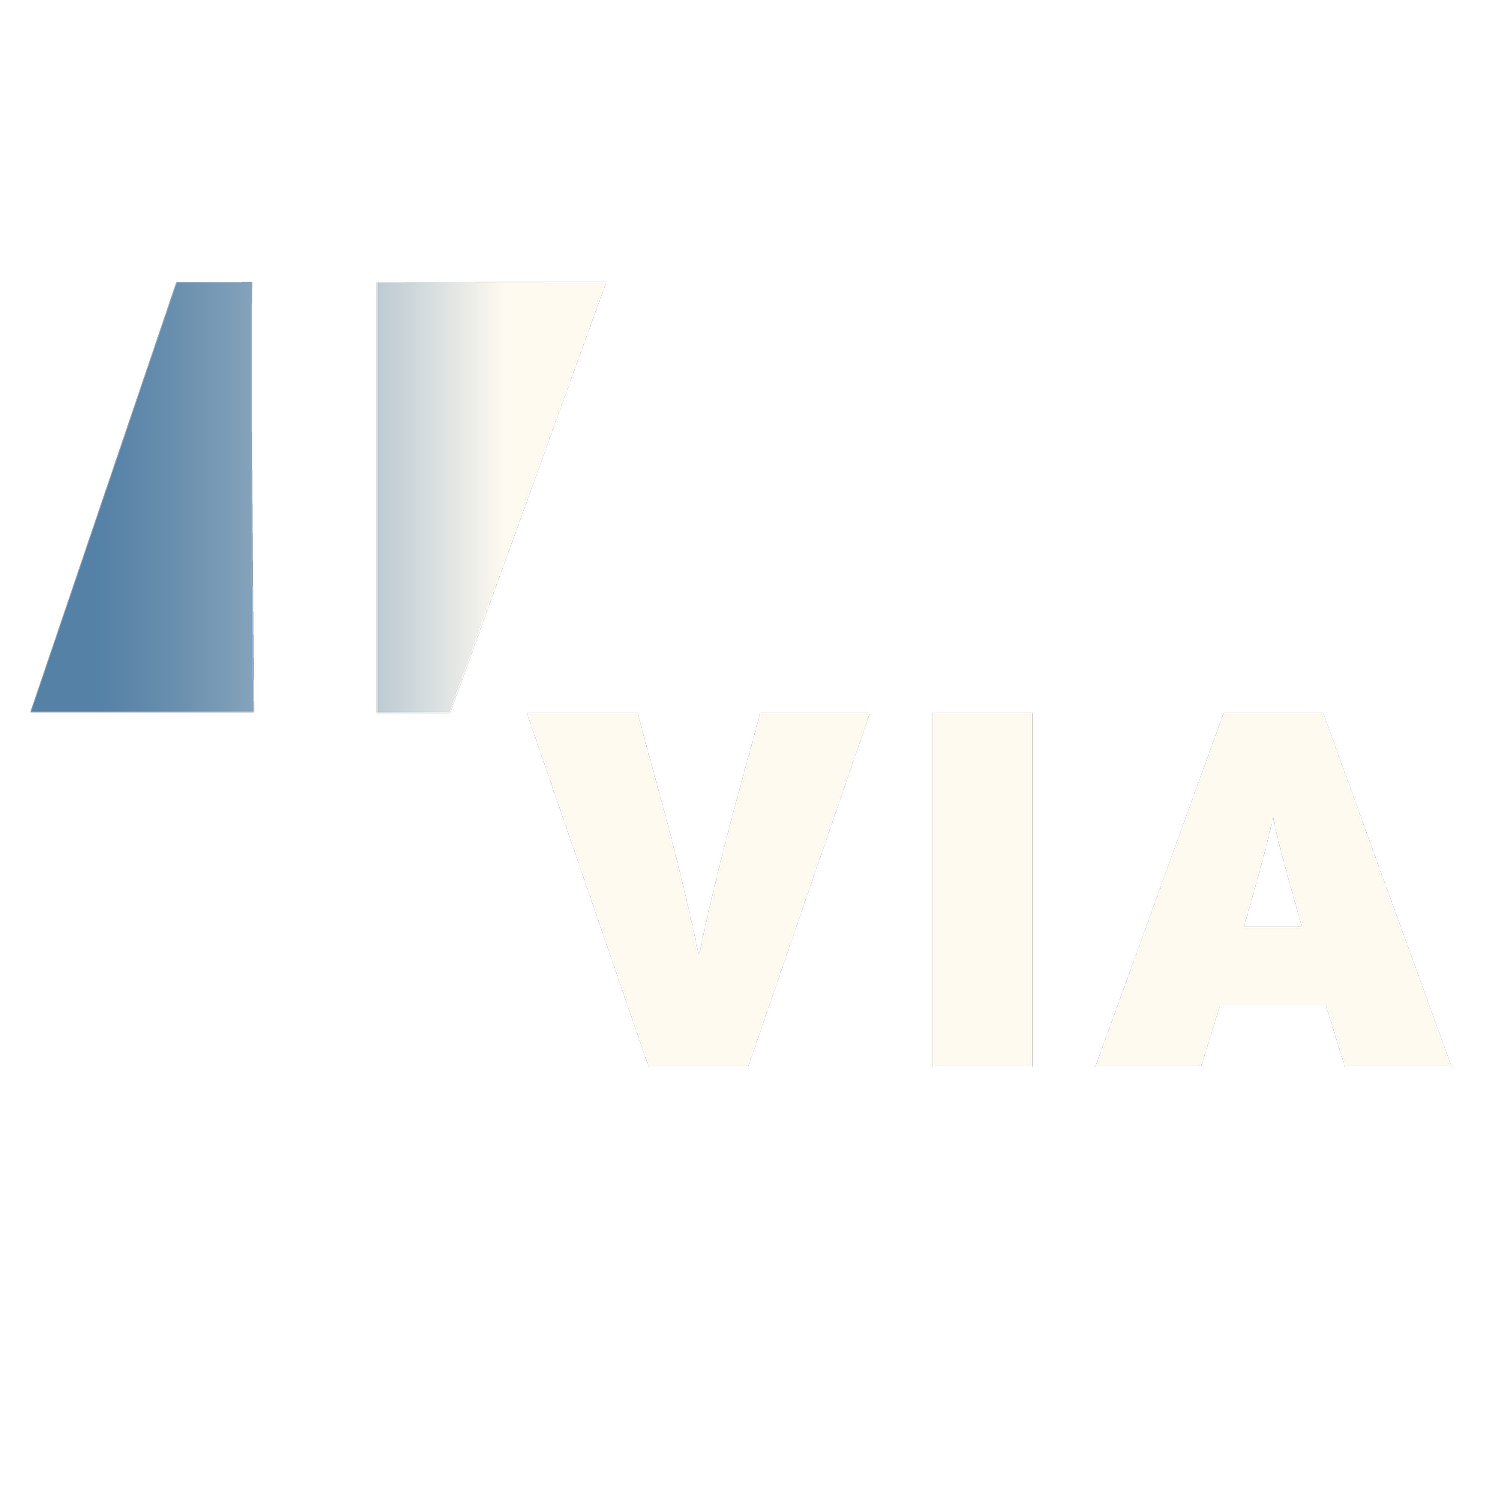 The VIA Company